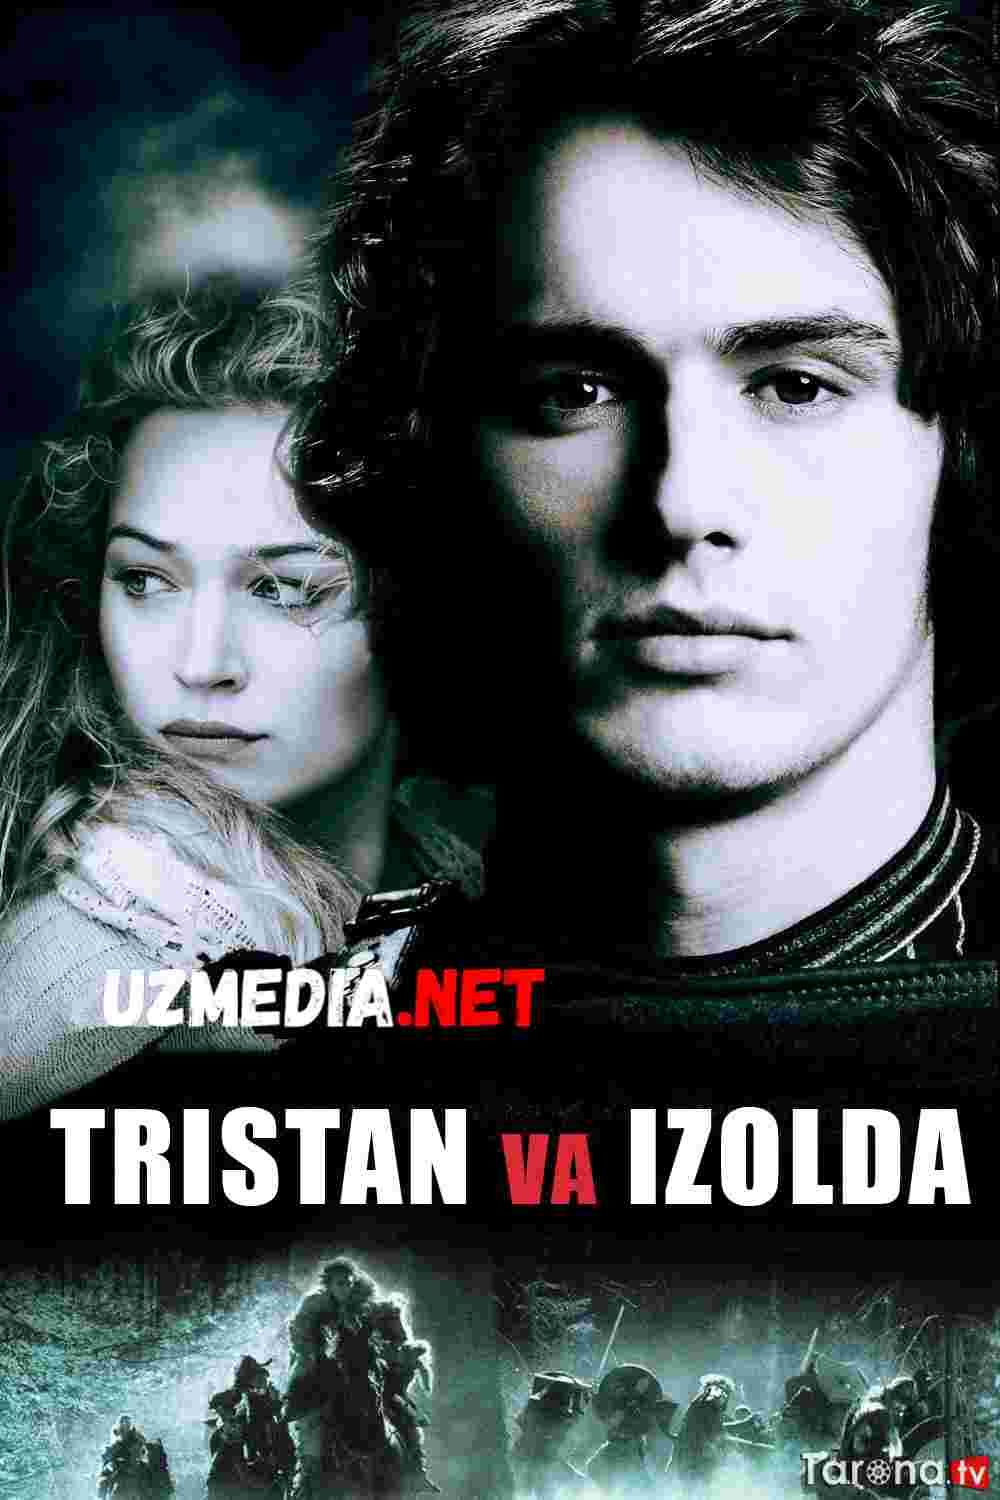 Tristan va Izolda / Tristan va Isolda Uzbek tilida O'zbekcha tarjima kino 2005 HD tas-ix skachat